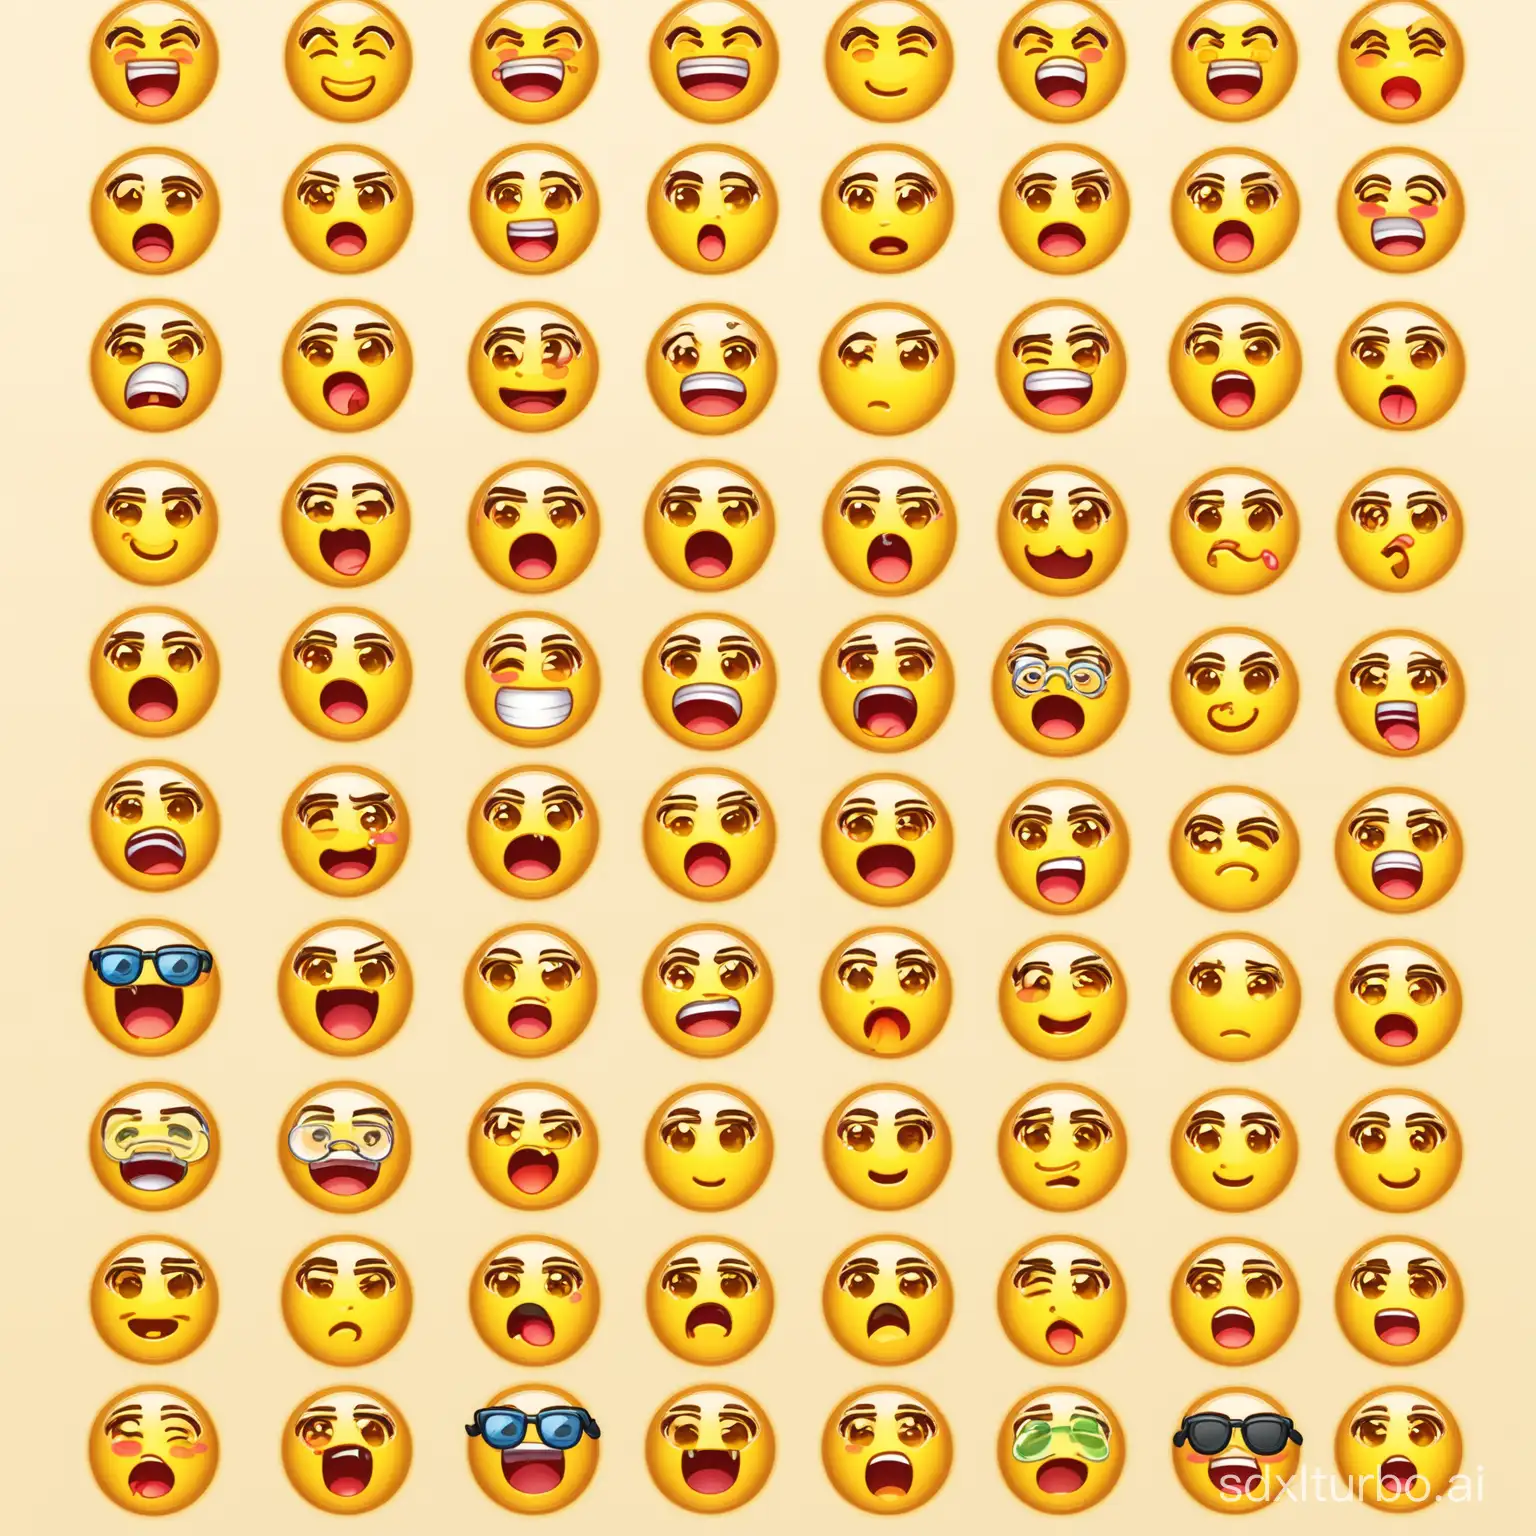 Emoji pack, multiple expressions.